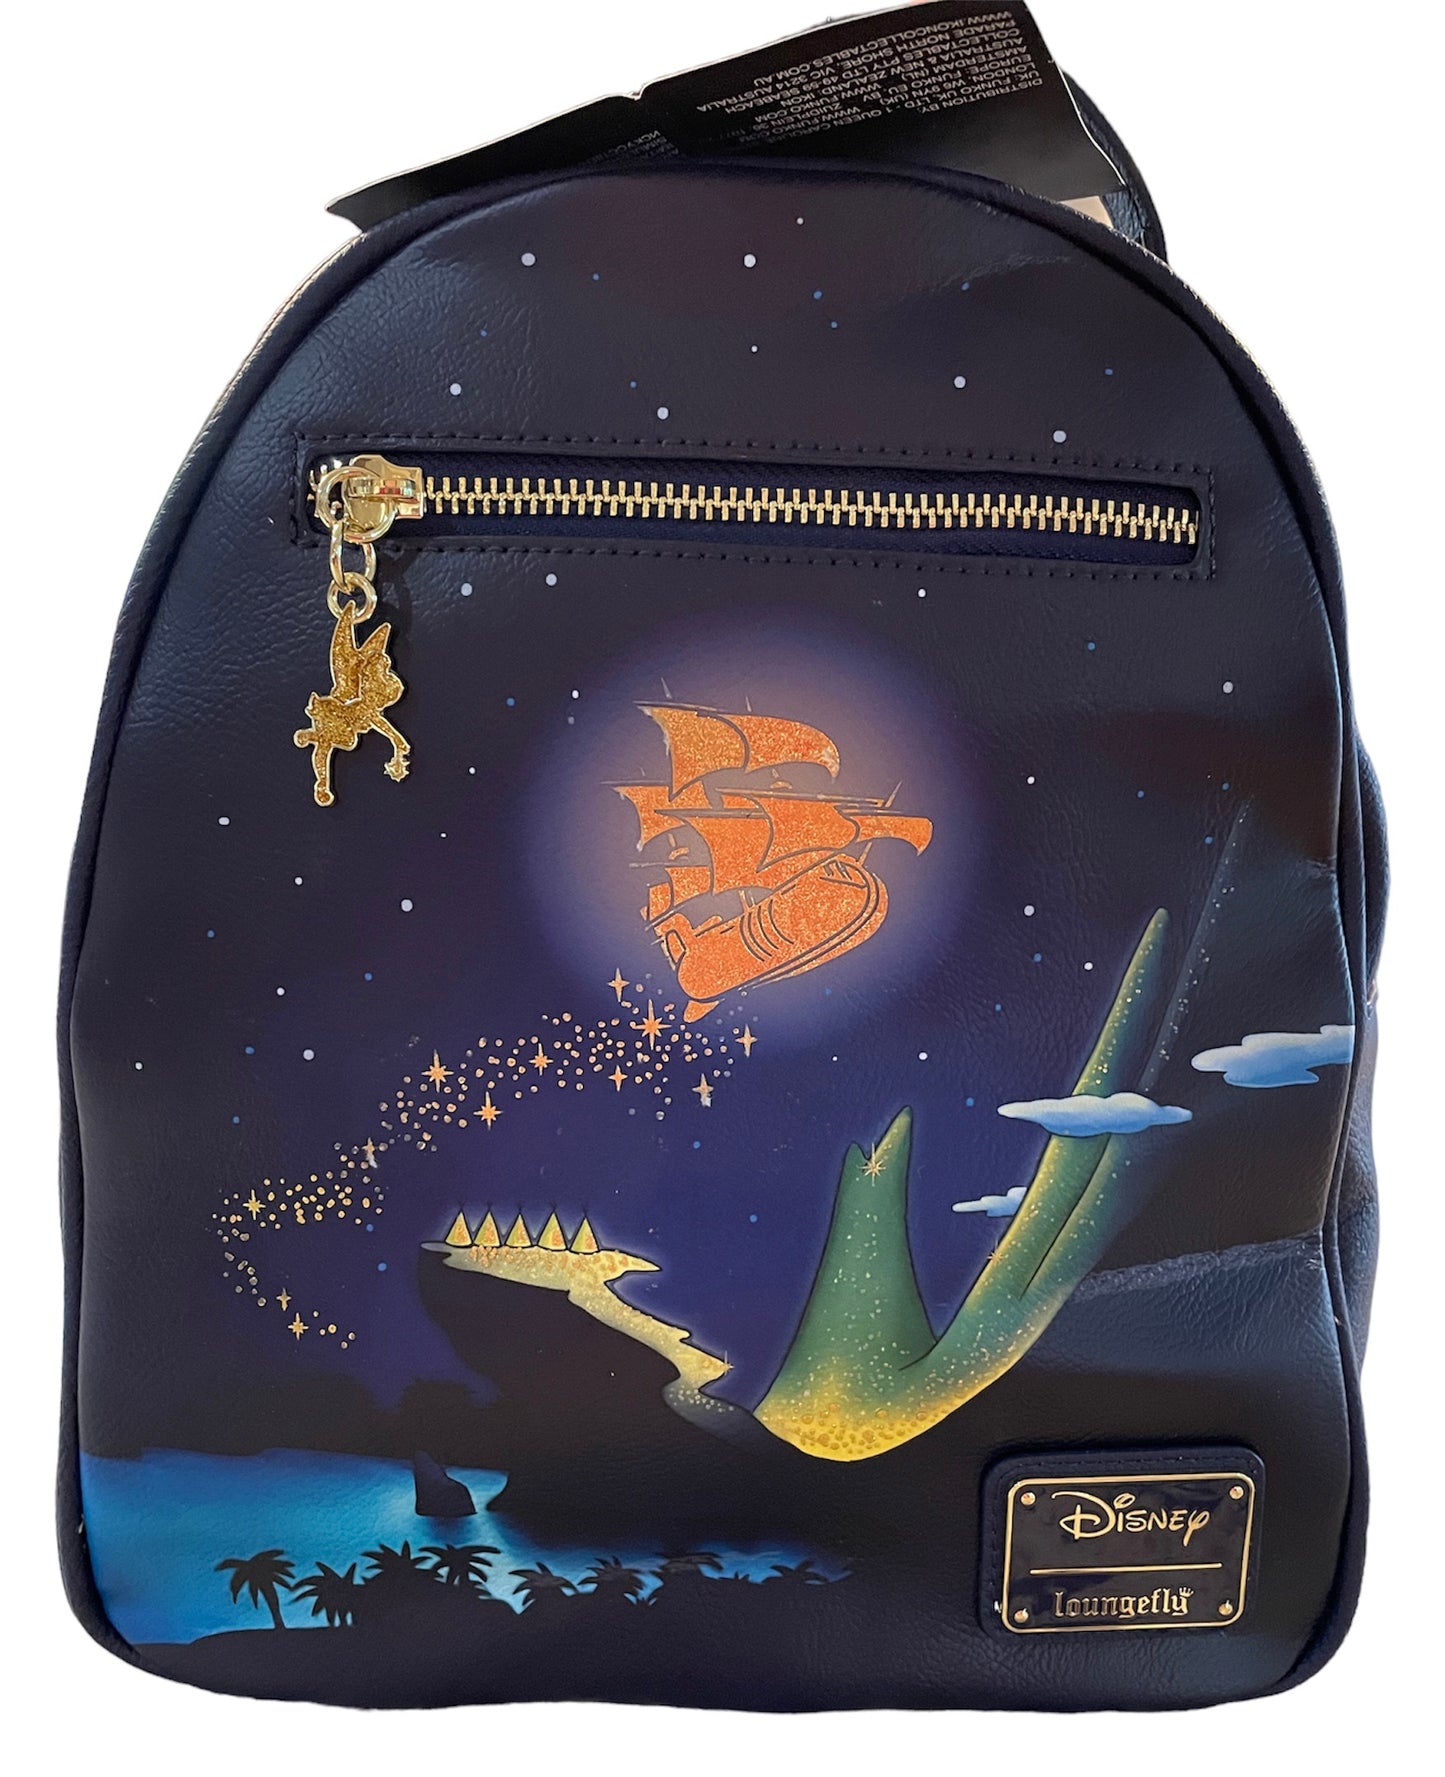 Peter Pan Flying Jolly Roger Mini-Backpack - EE Exclusive